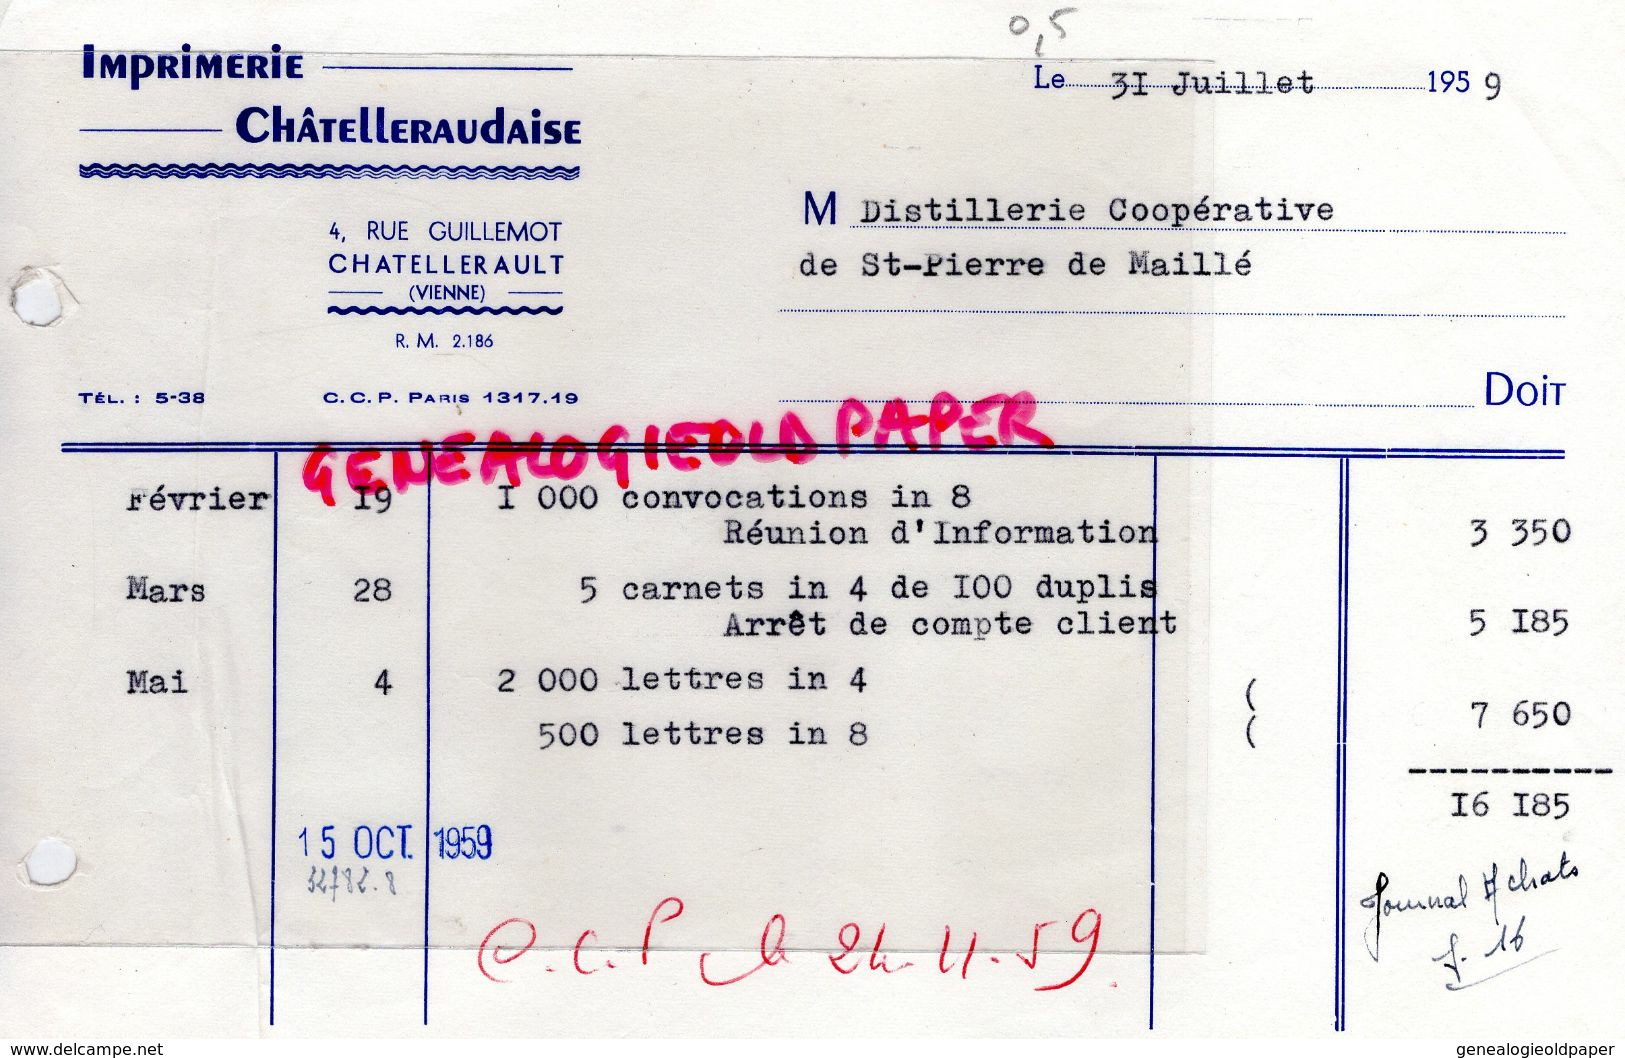 86- CHATELLERAULT- FACTURE IMPRIMERIE CHATELLERAUDAISE- 4 RUE GUILLEMINOT- 1959 - Imprimerie & Papeterie